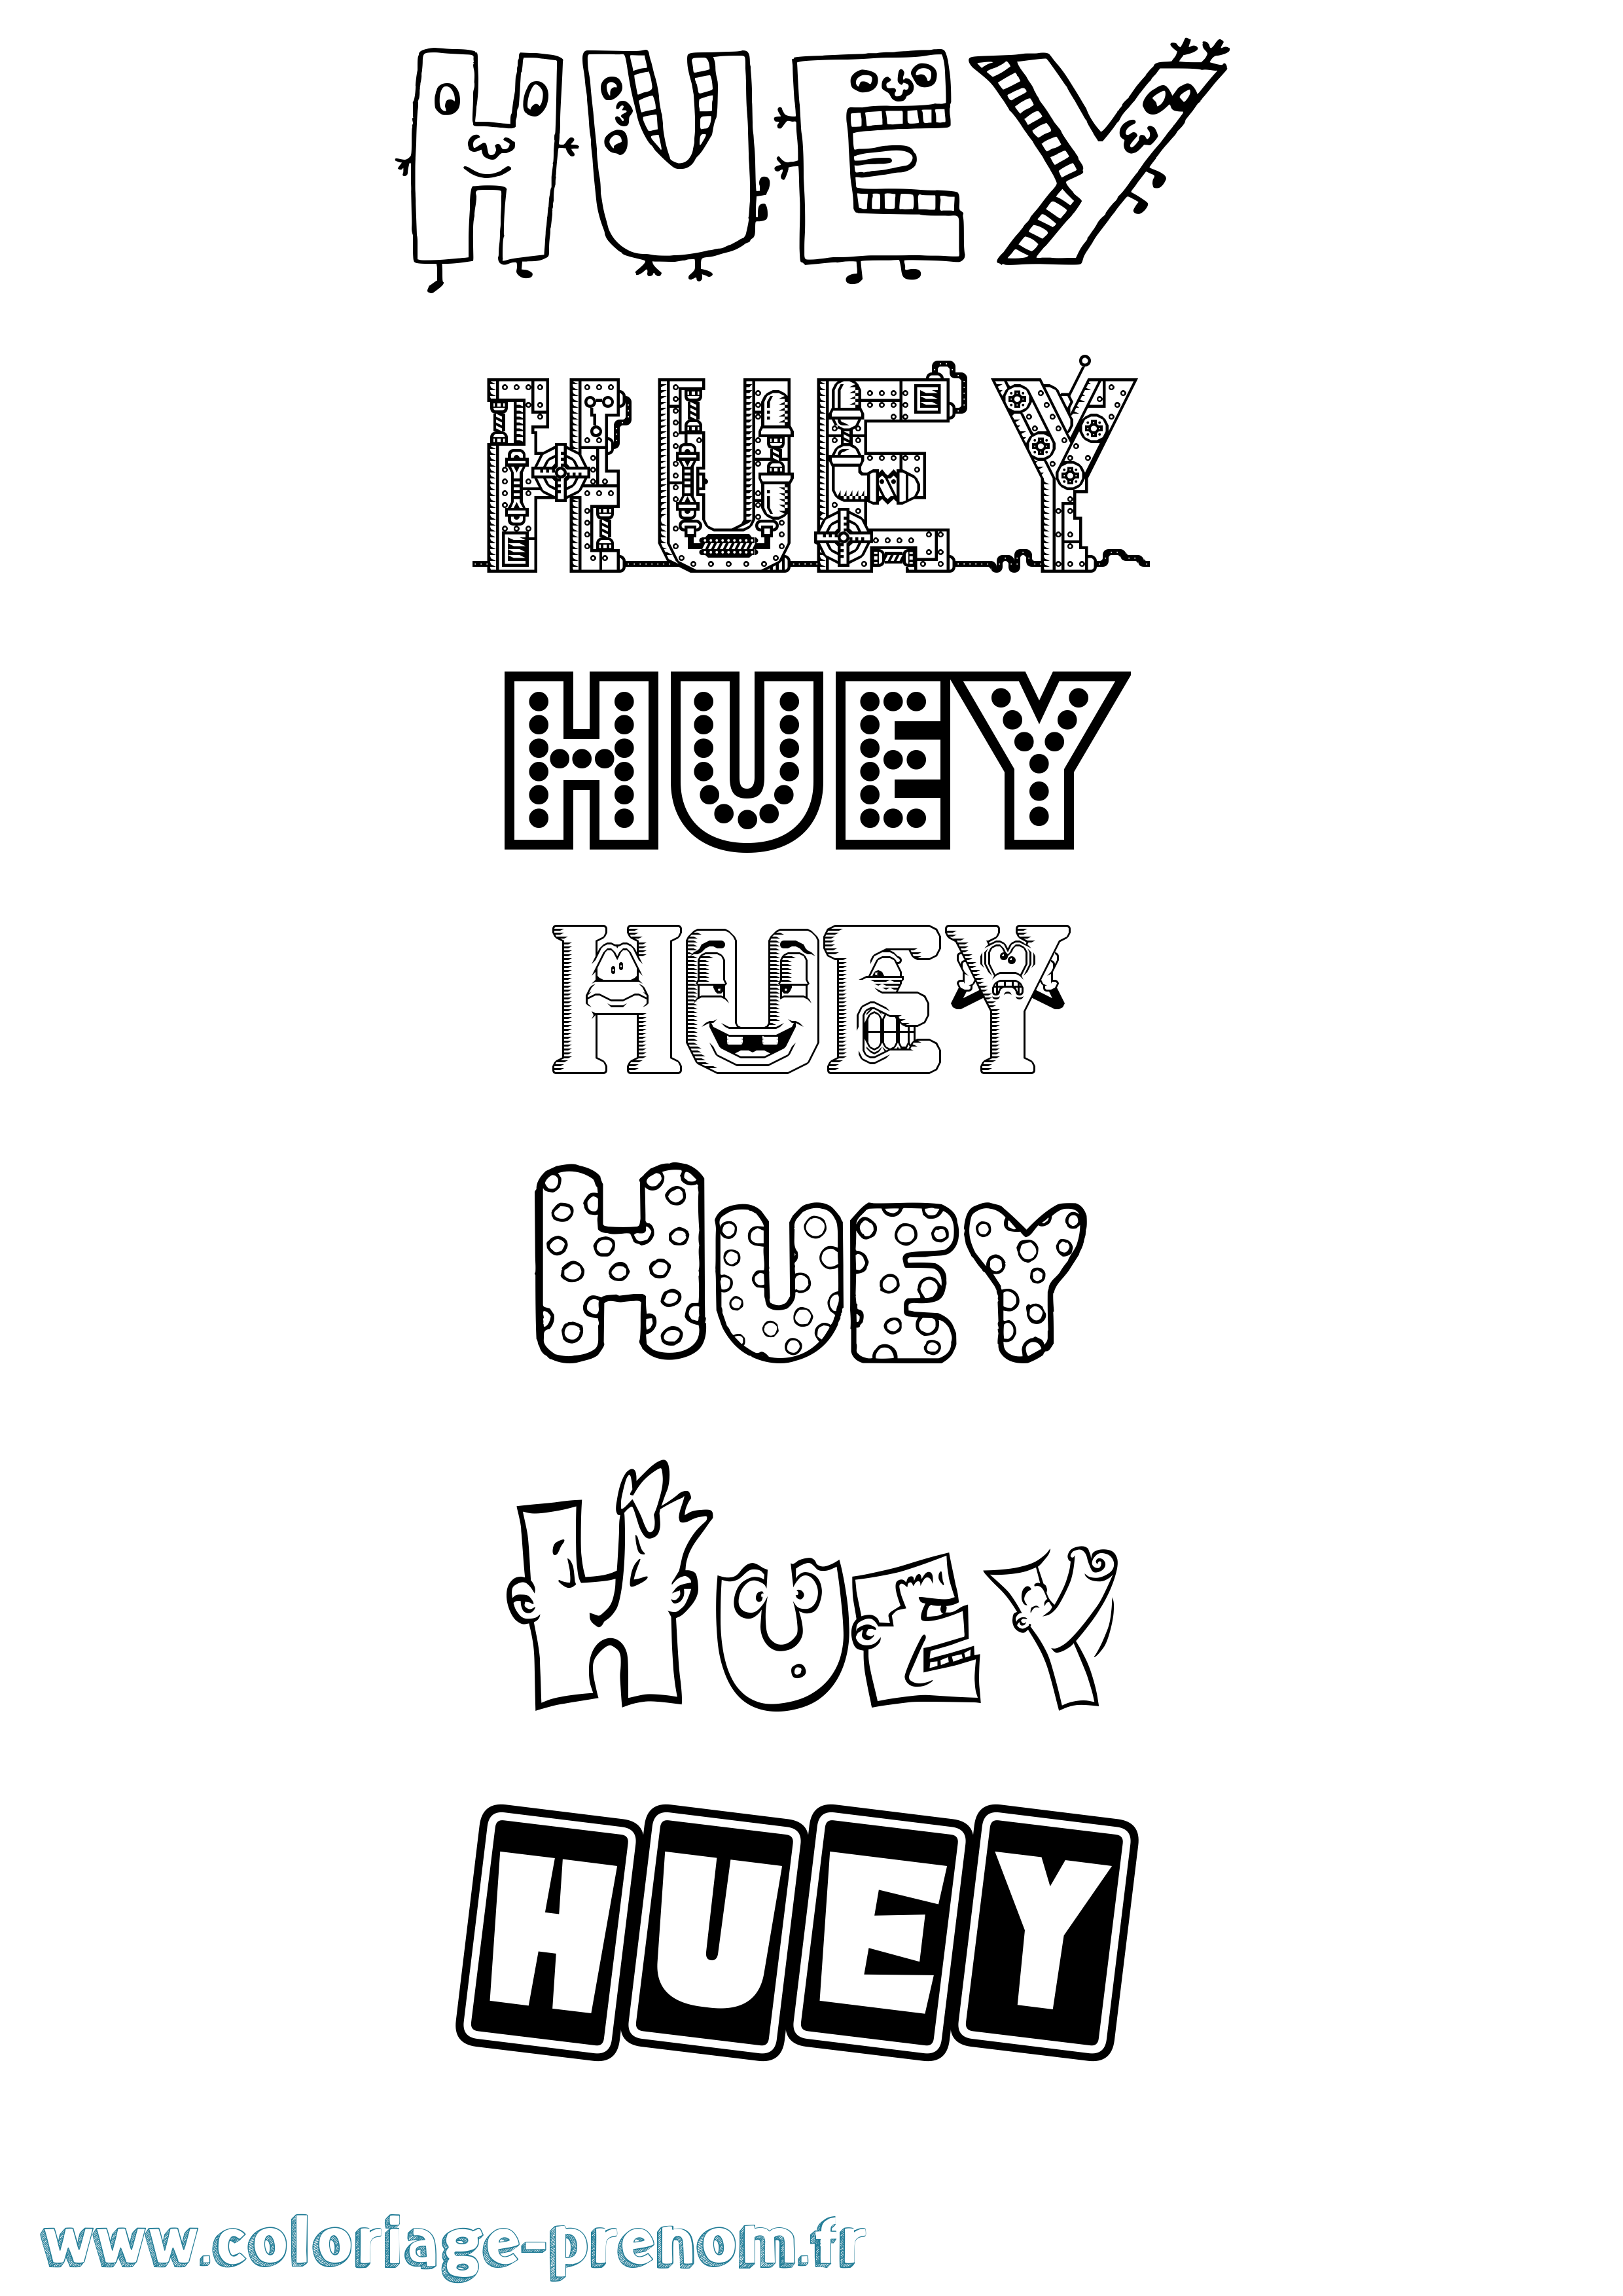 Coloriage prénom Huey Fun